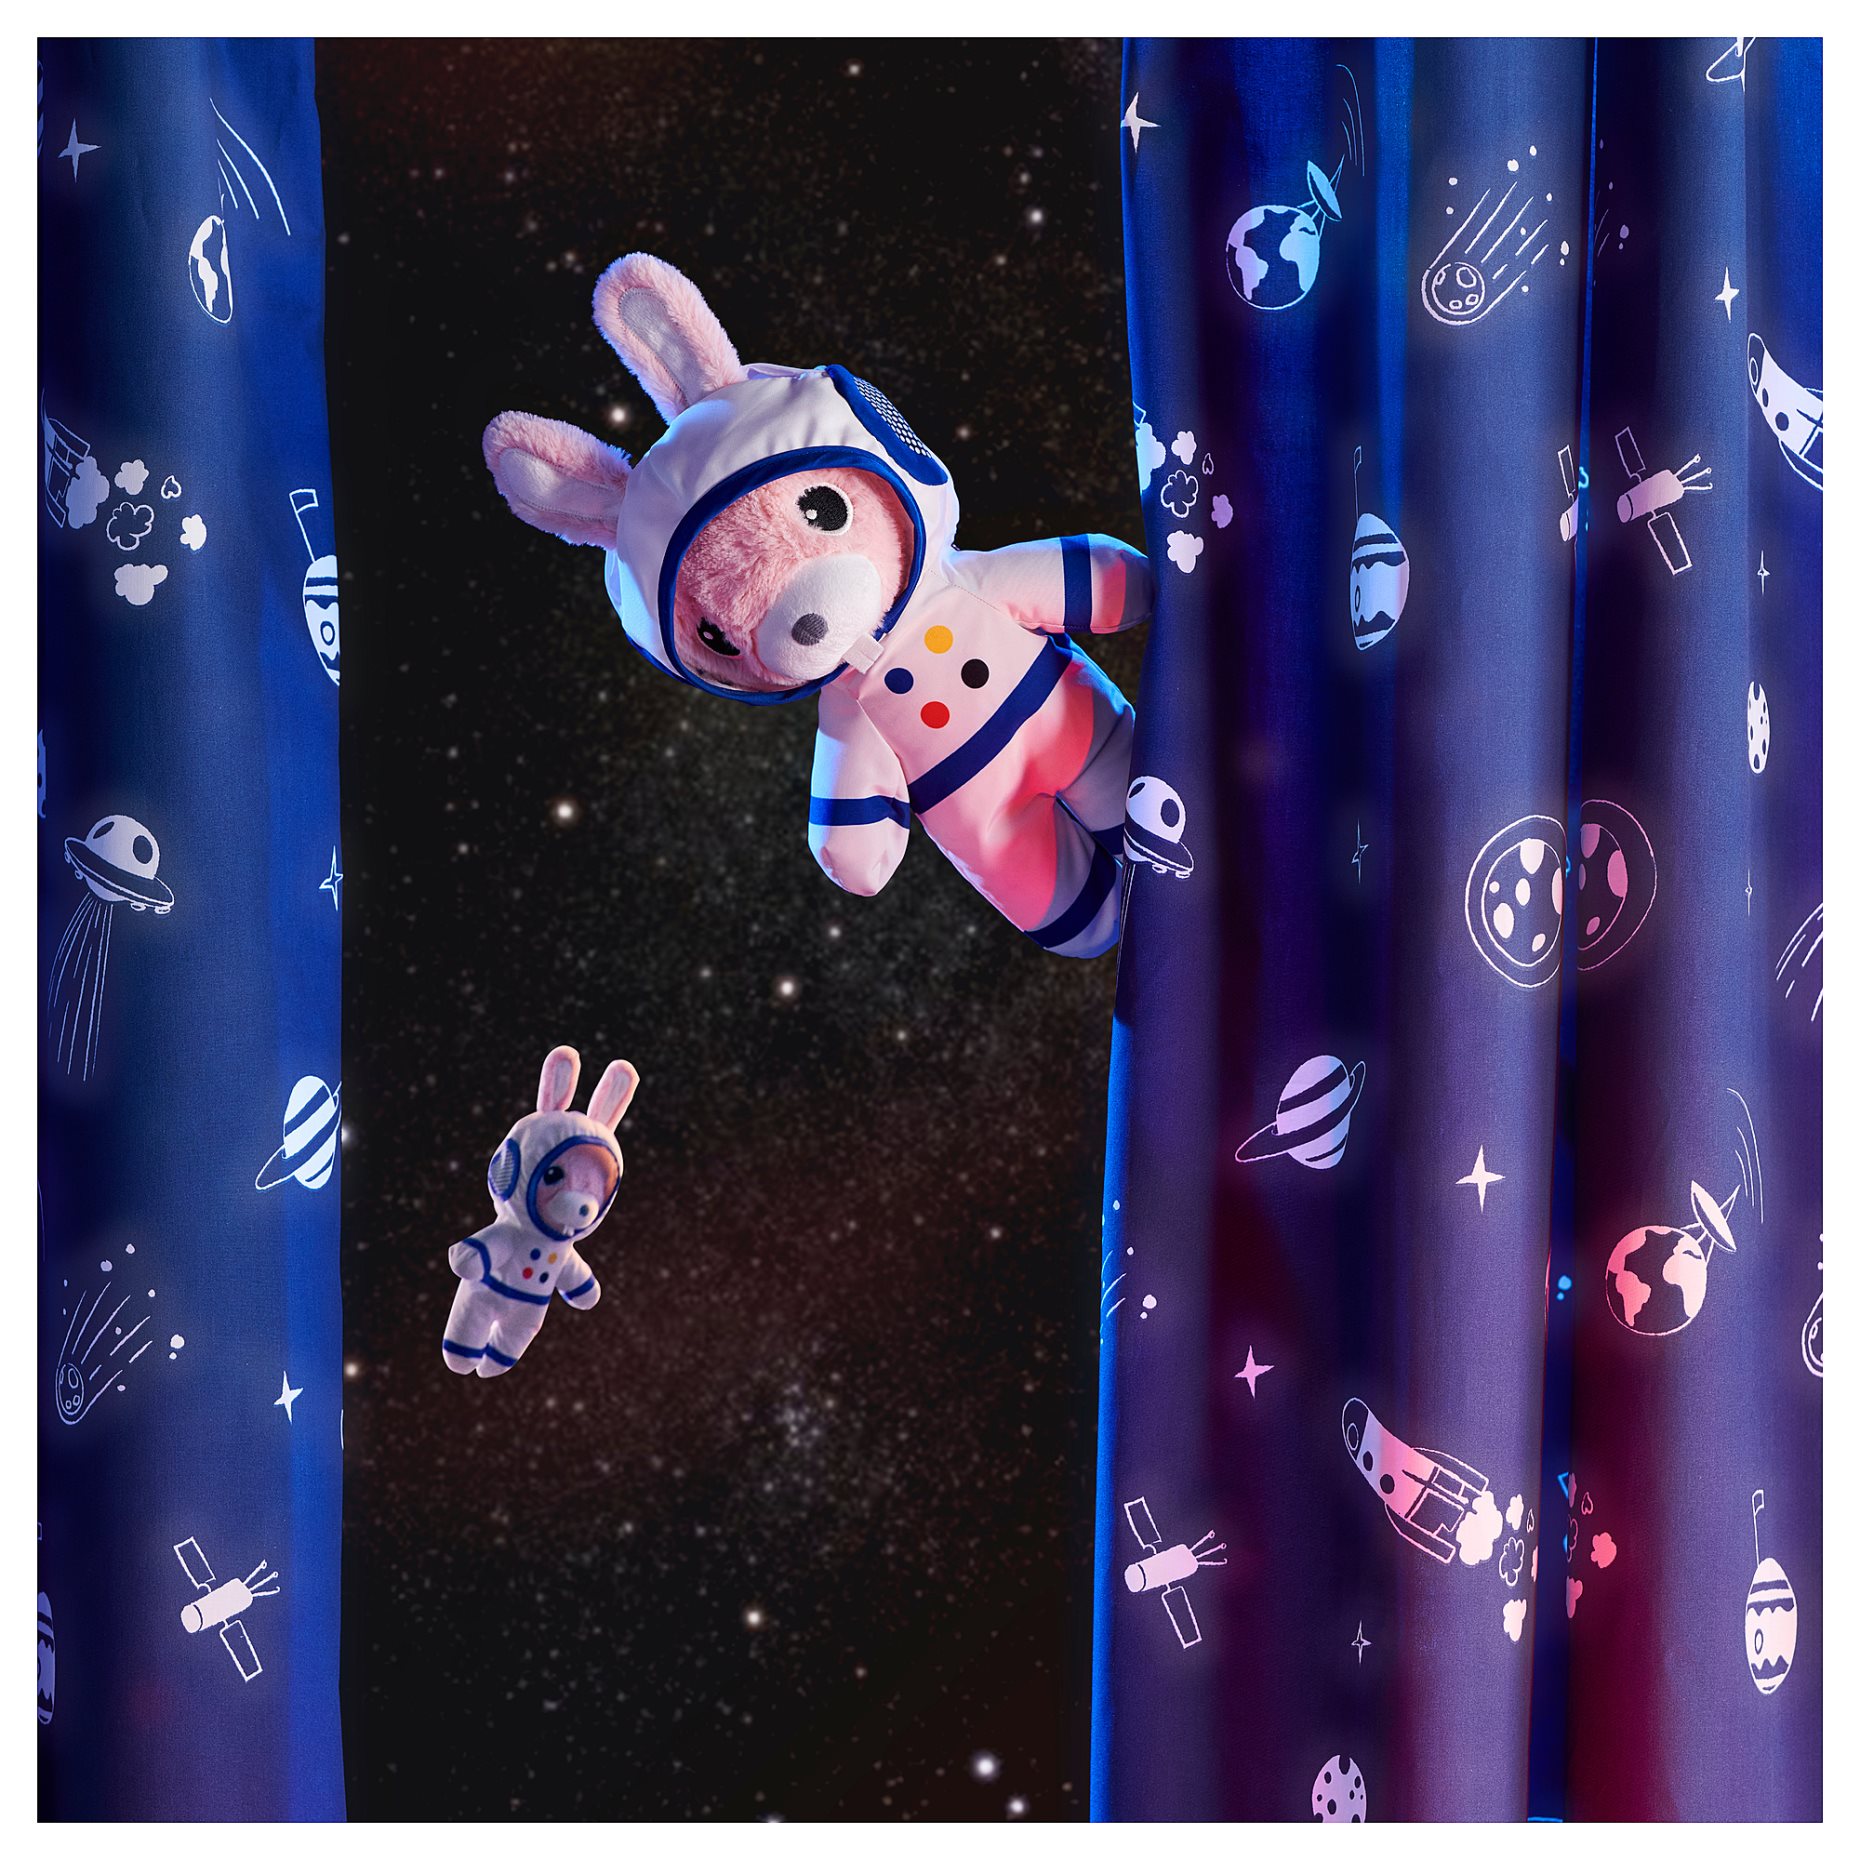 AFTONSPARV, soft toy rabbit with astronaut suit, 28 cm, 705.515.31